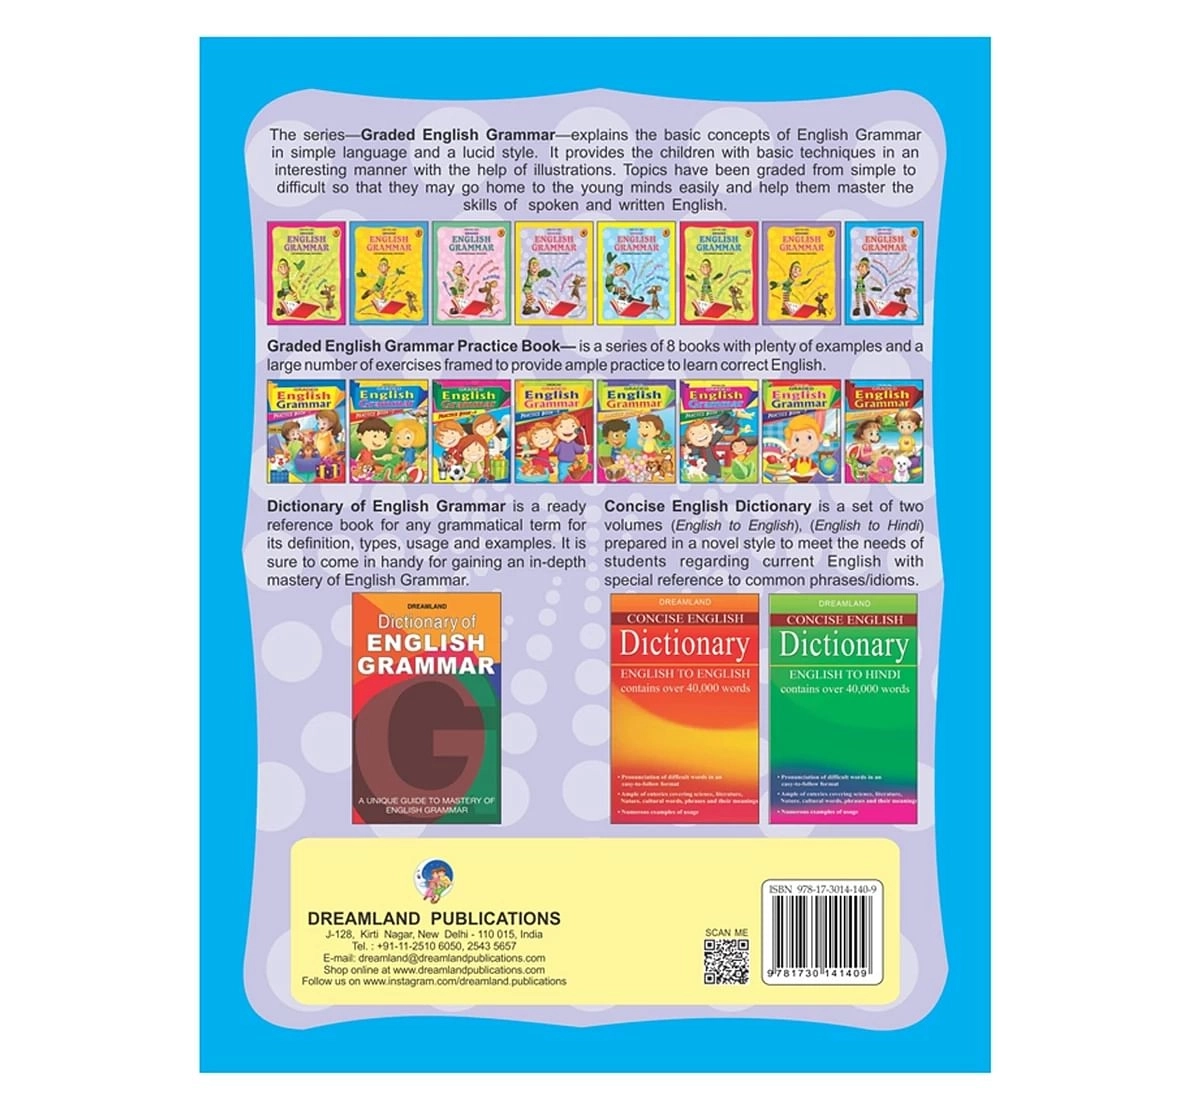 Dreamland Paper Back Graded English Grammar Part 8 School Textbooks for kids 5Y+, Multicolour